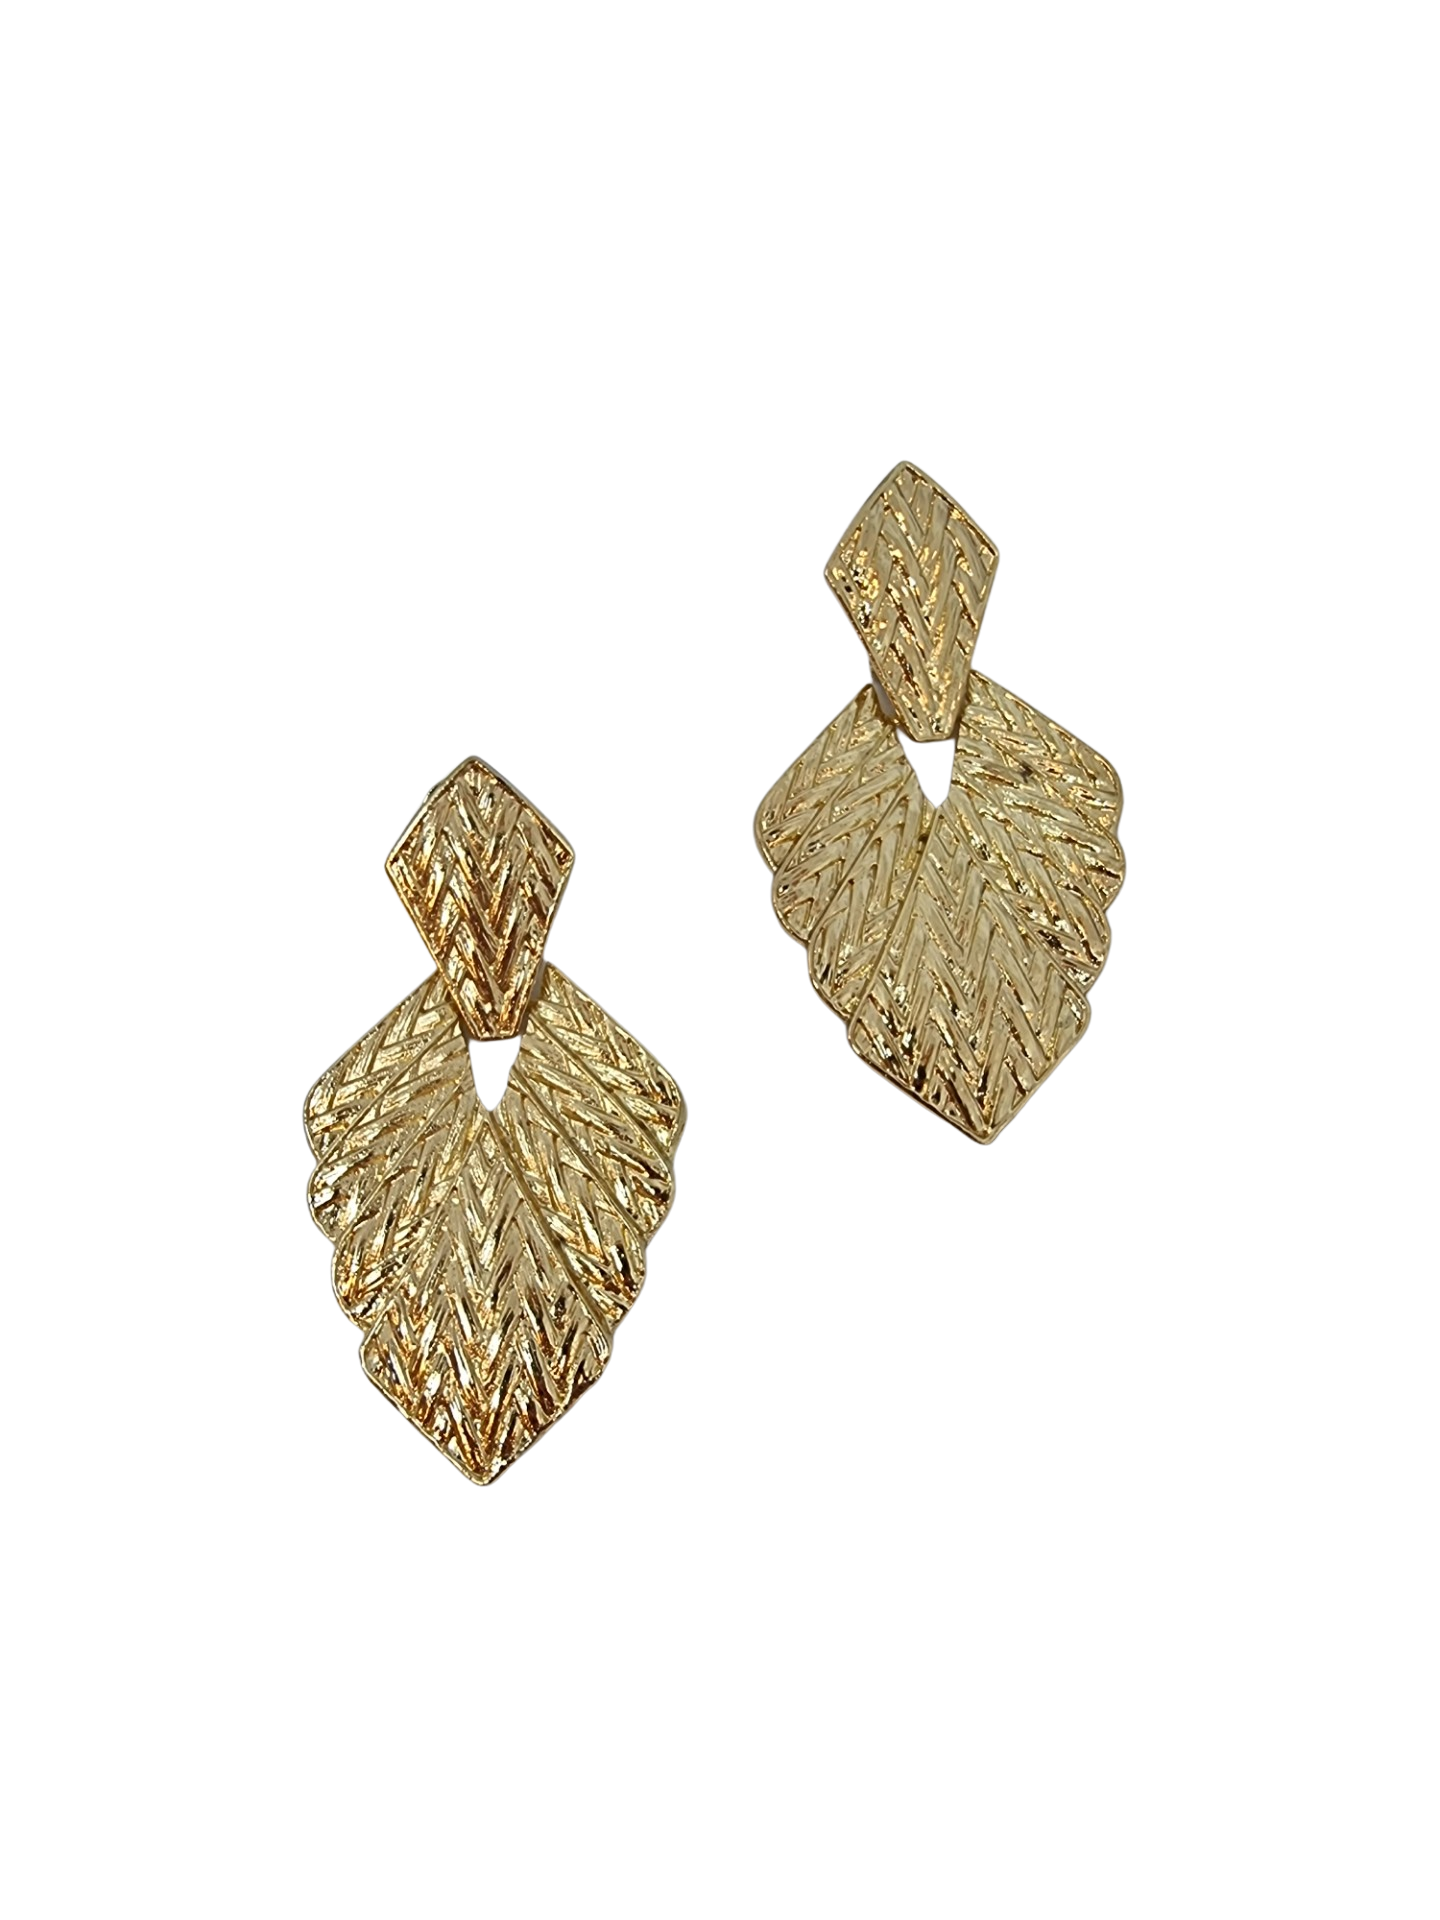 Gold Etched Leaf Shape Earrings